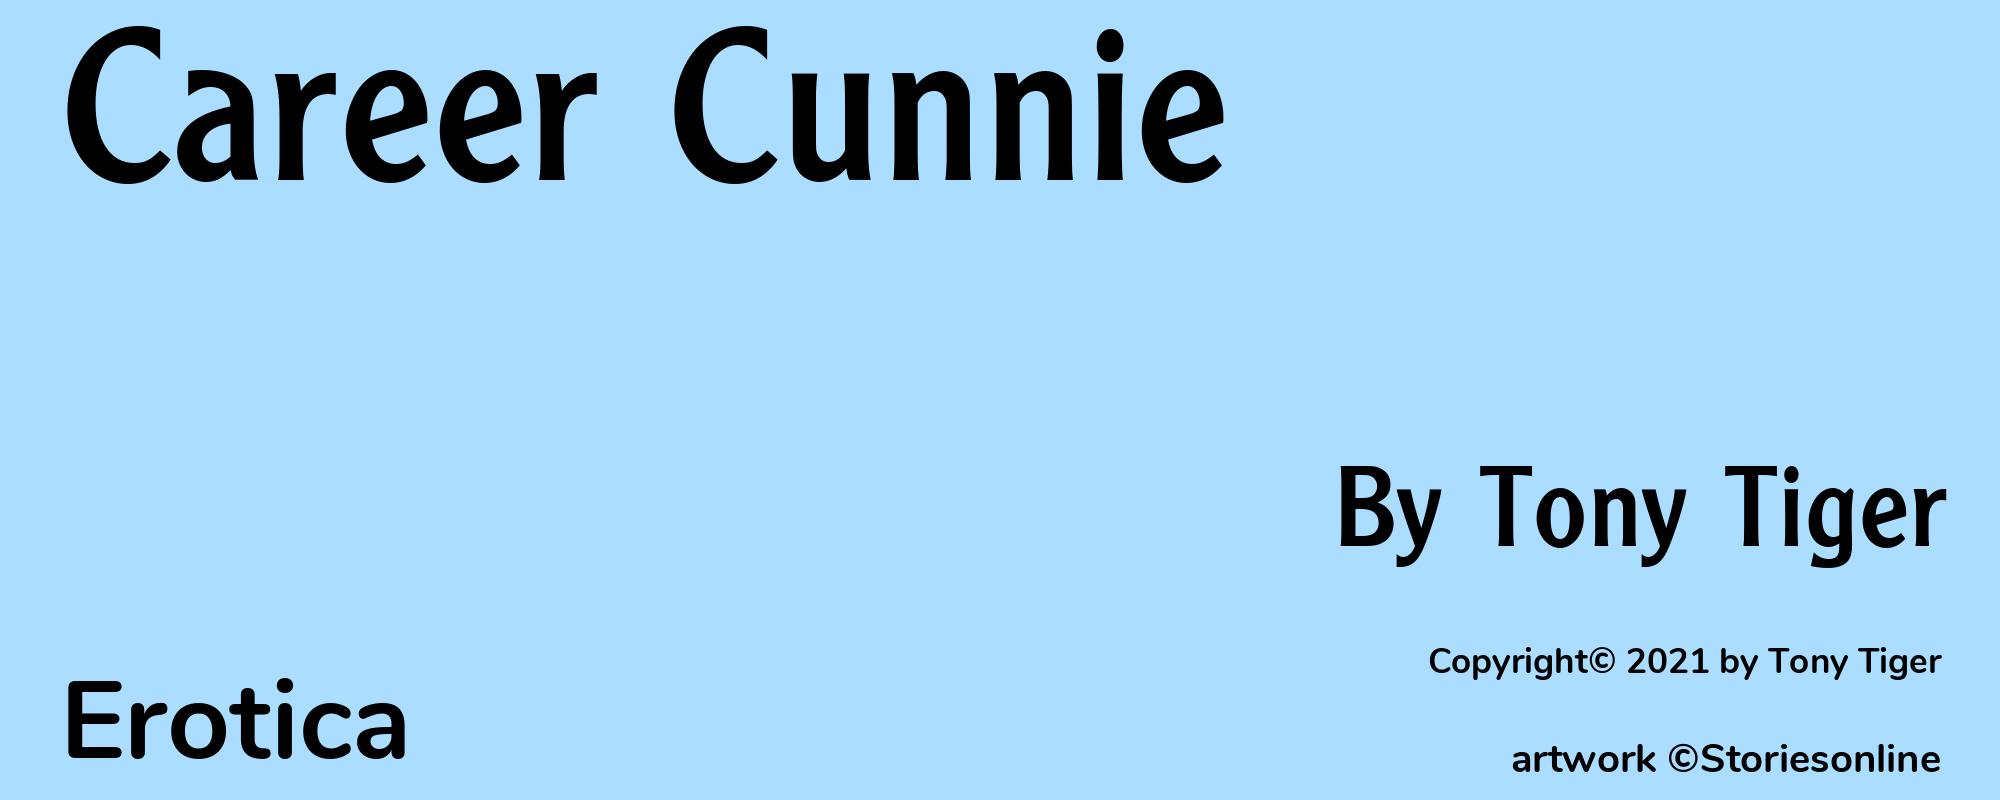 Career Cunnie - Cover